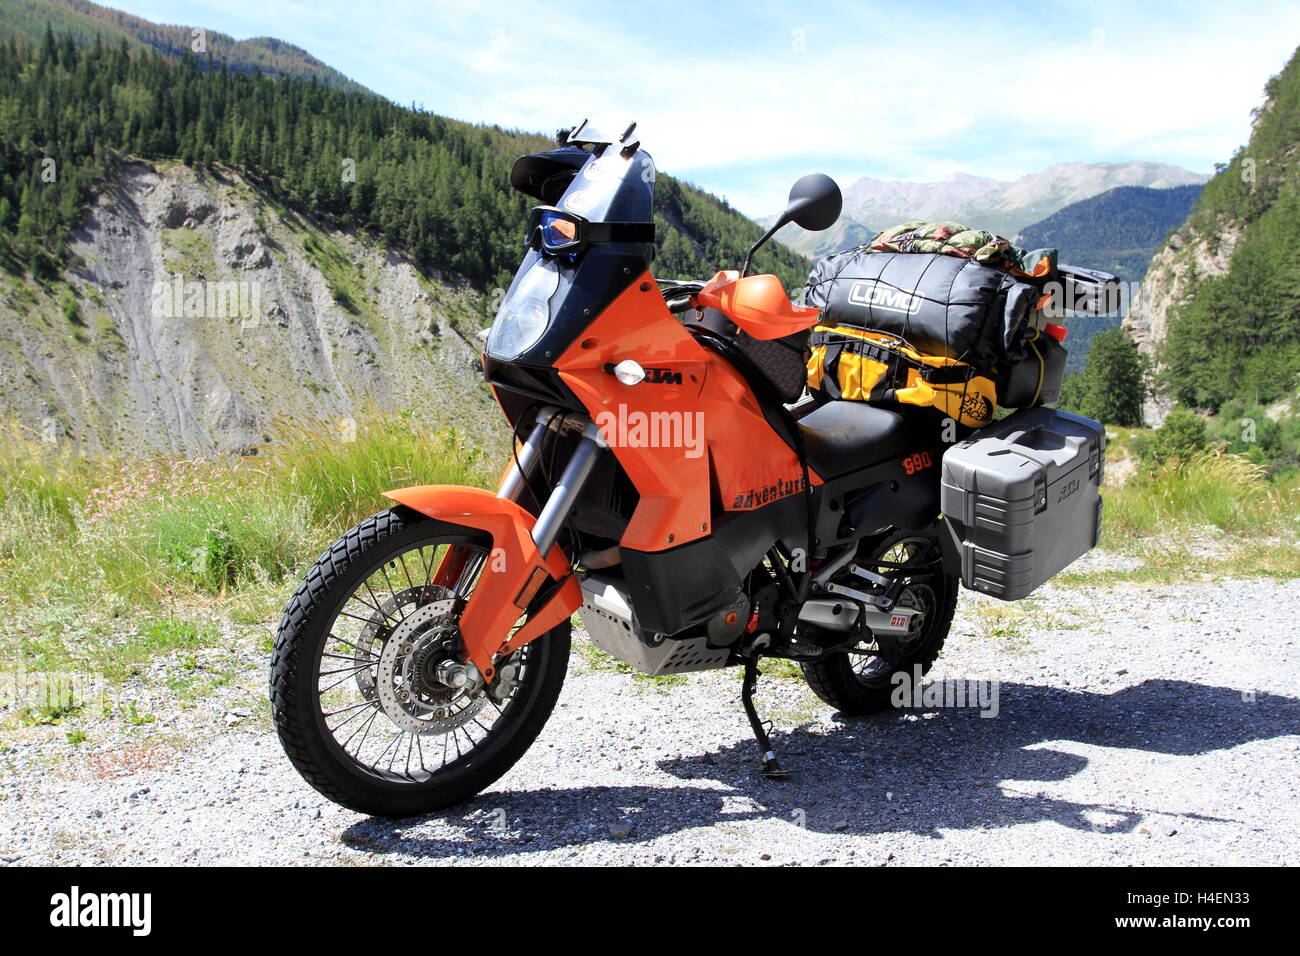 KTM 990 Adventure moto avec assurance Photo Stock - Alamy